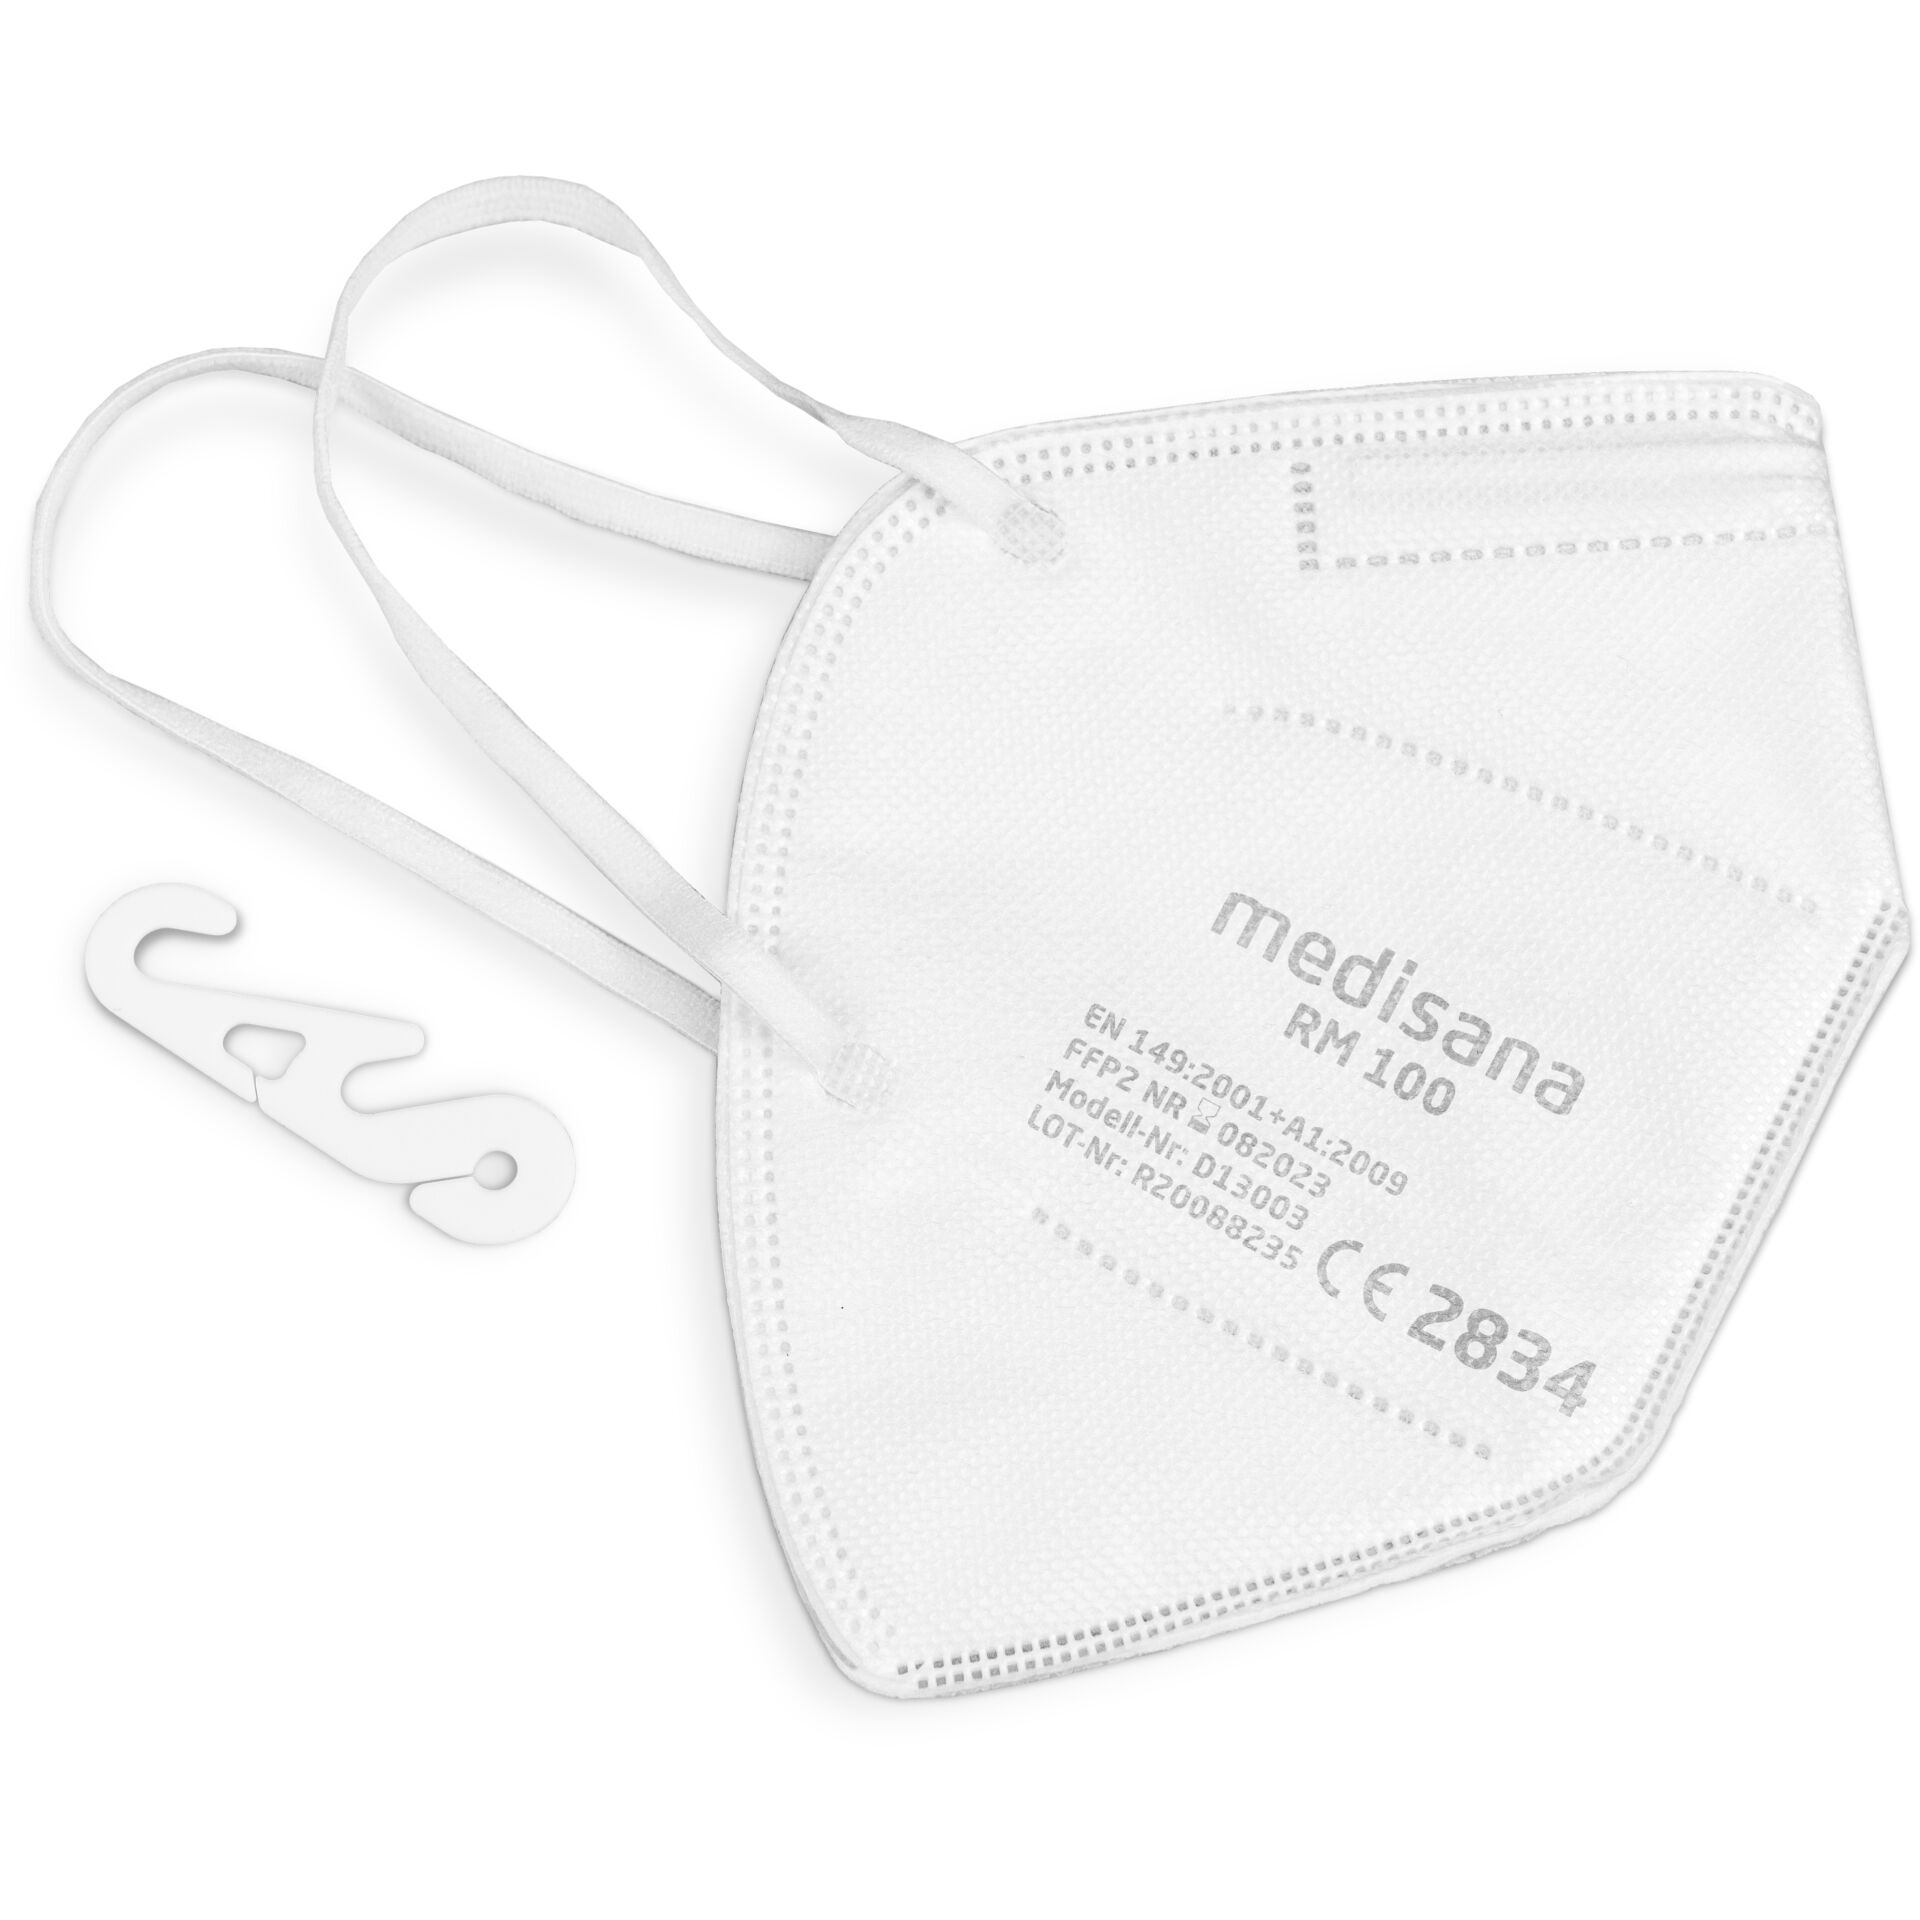 Medisana -RM 100 10 X FFP2 Atemschutzmaske -Medisana Hardware/Electronic